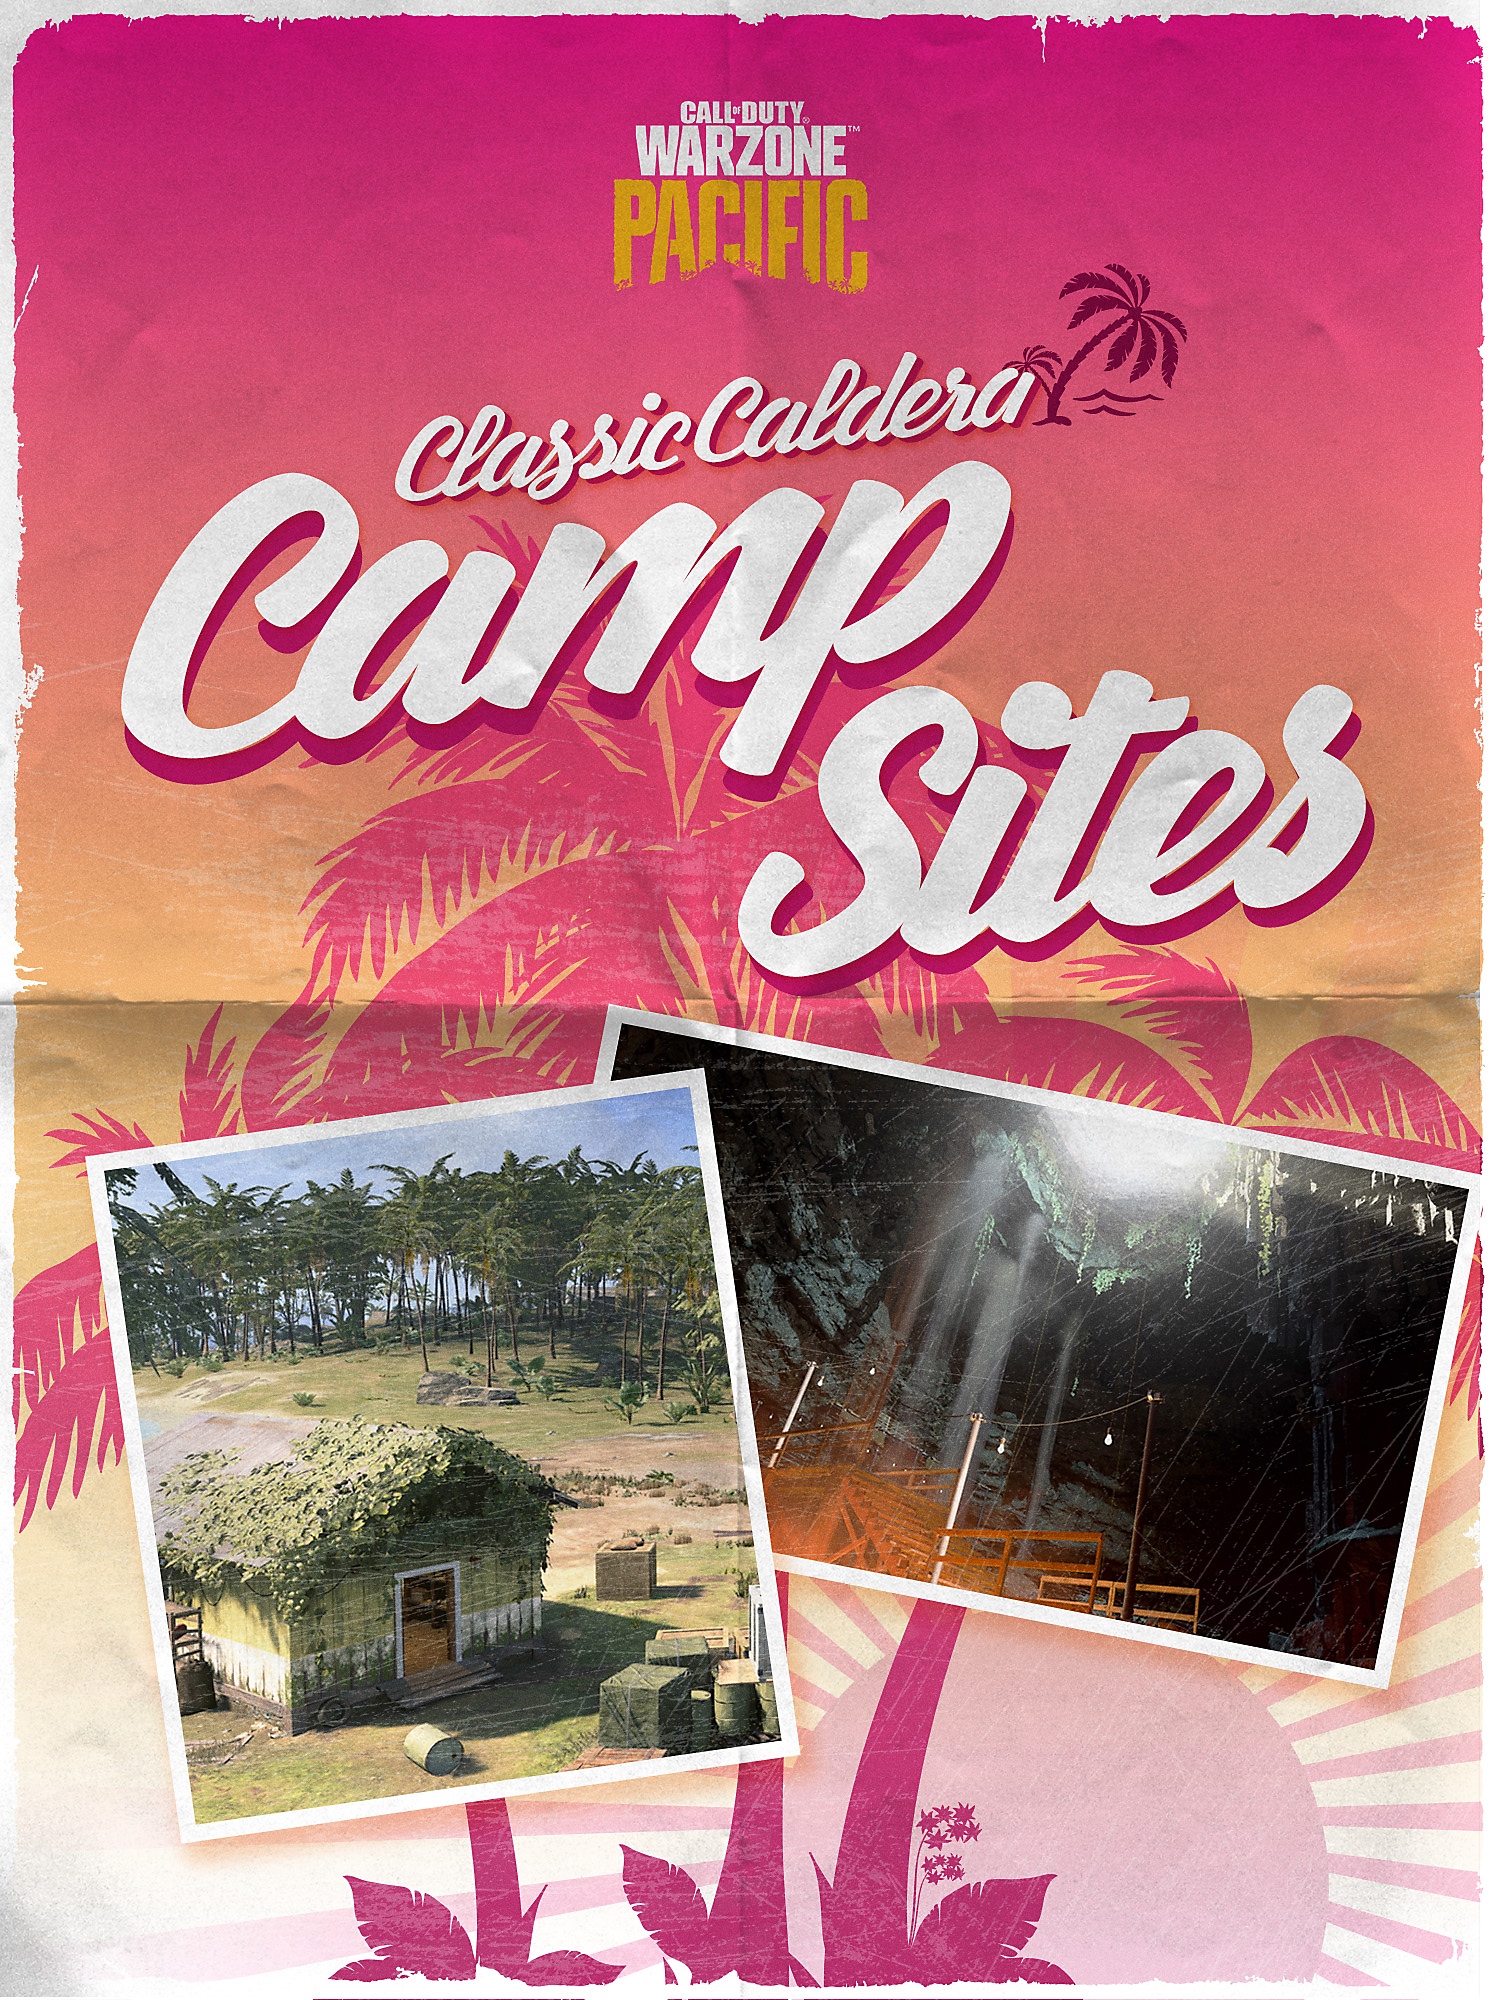 Capa do panfleto Acampamentos Clássicos de Caldera